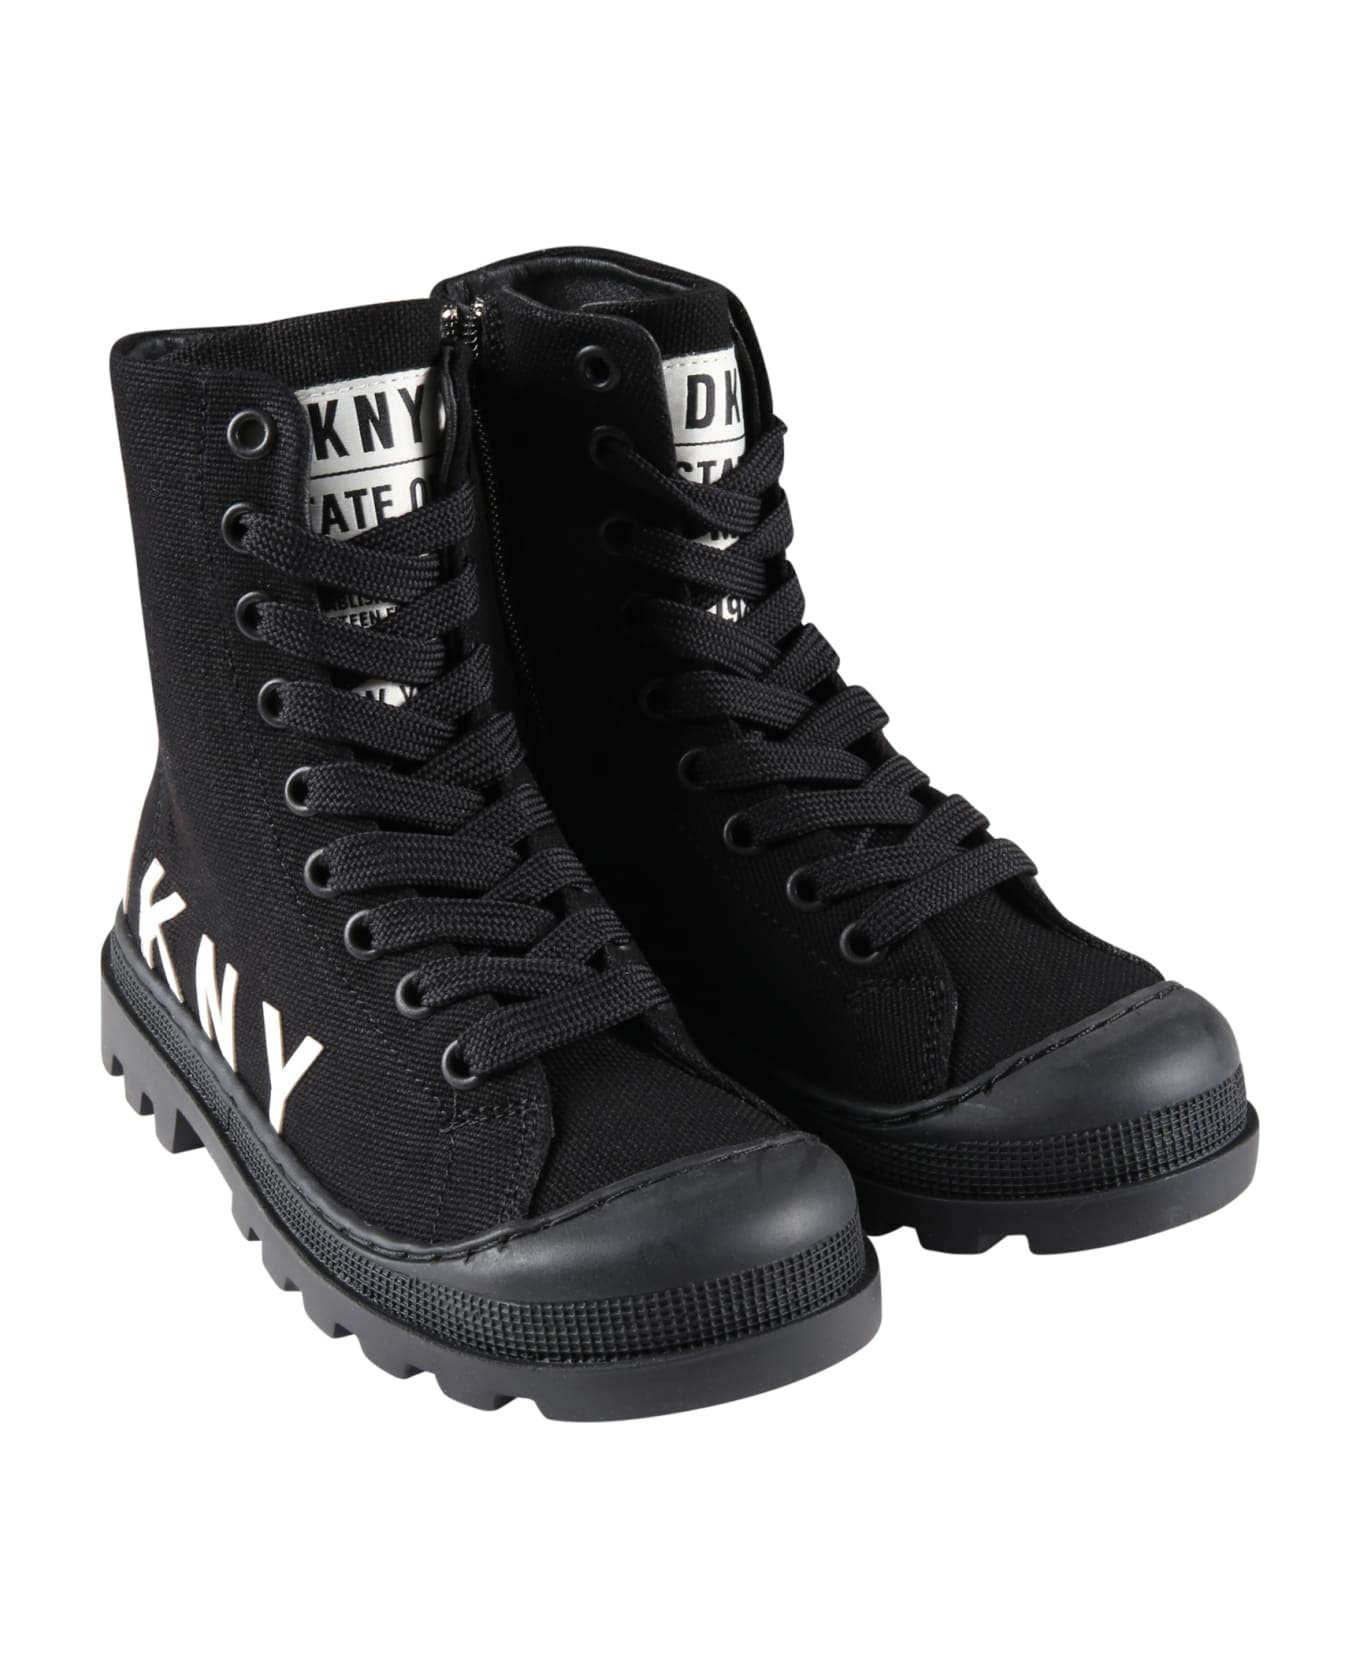 DKNY Black Sneakers For Girl With White Logo - Black シューズ